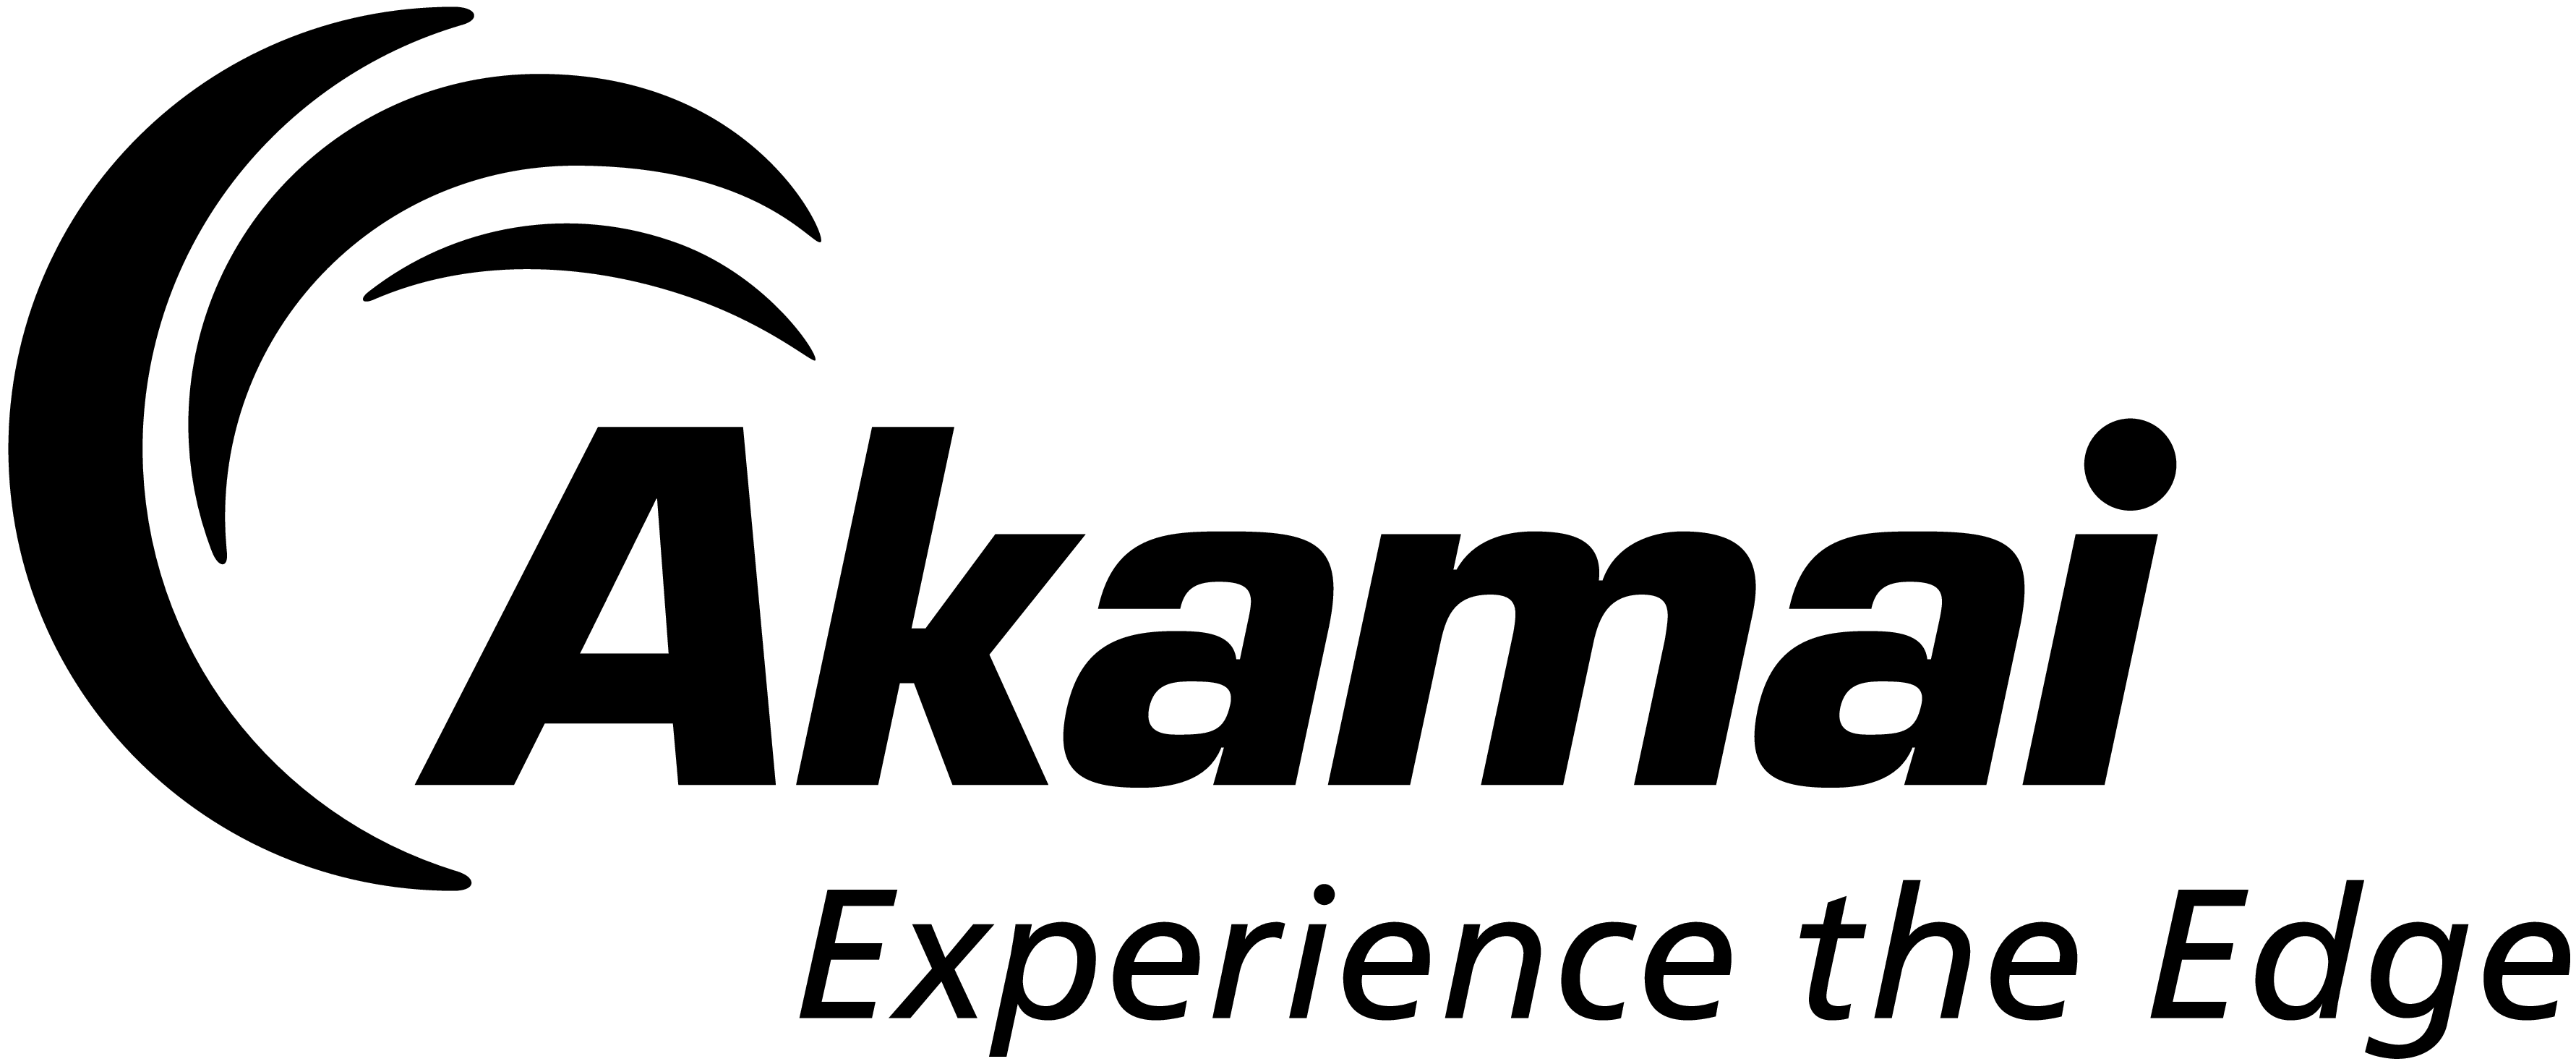 The D2C Summit Sponsor - Akamai